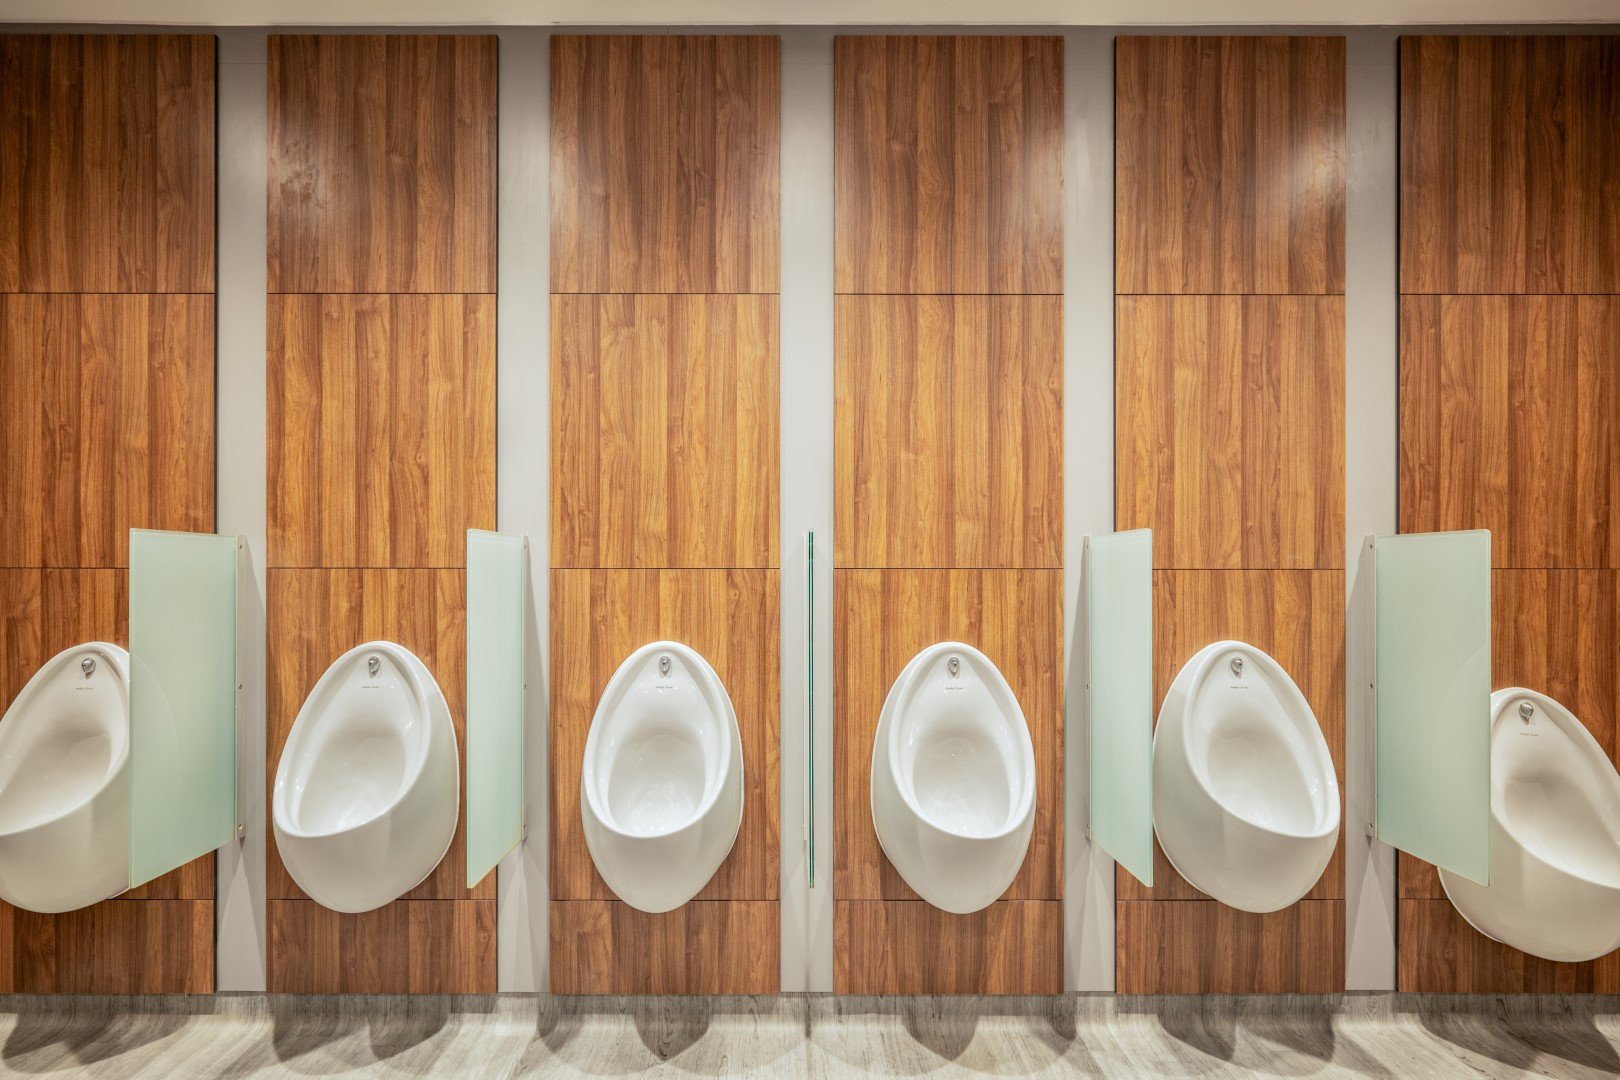  urinals in a washroom 